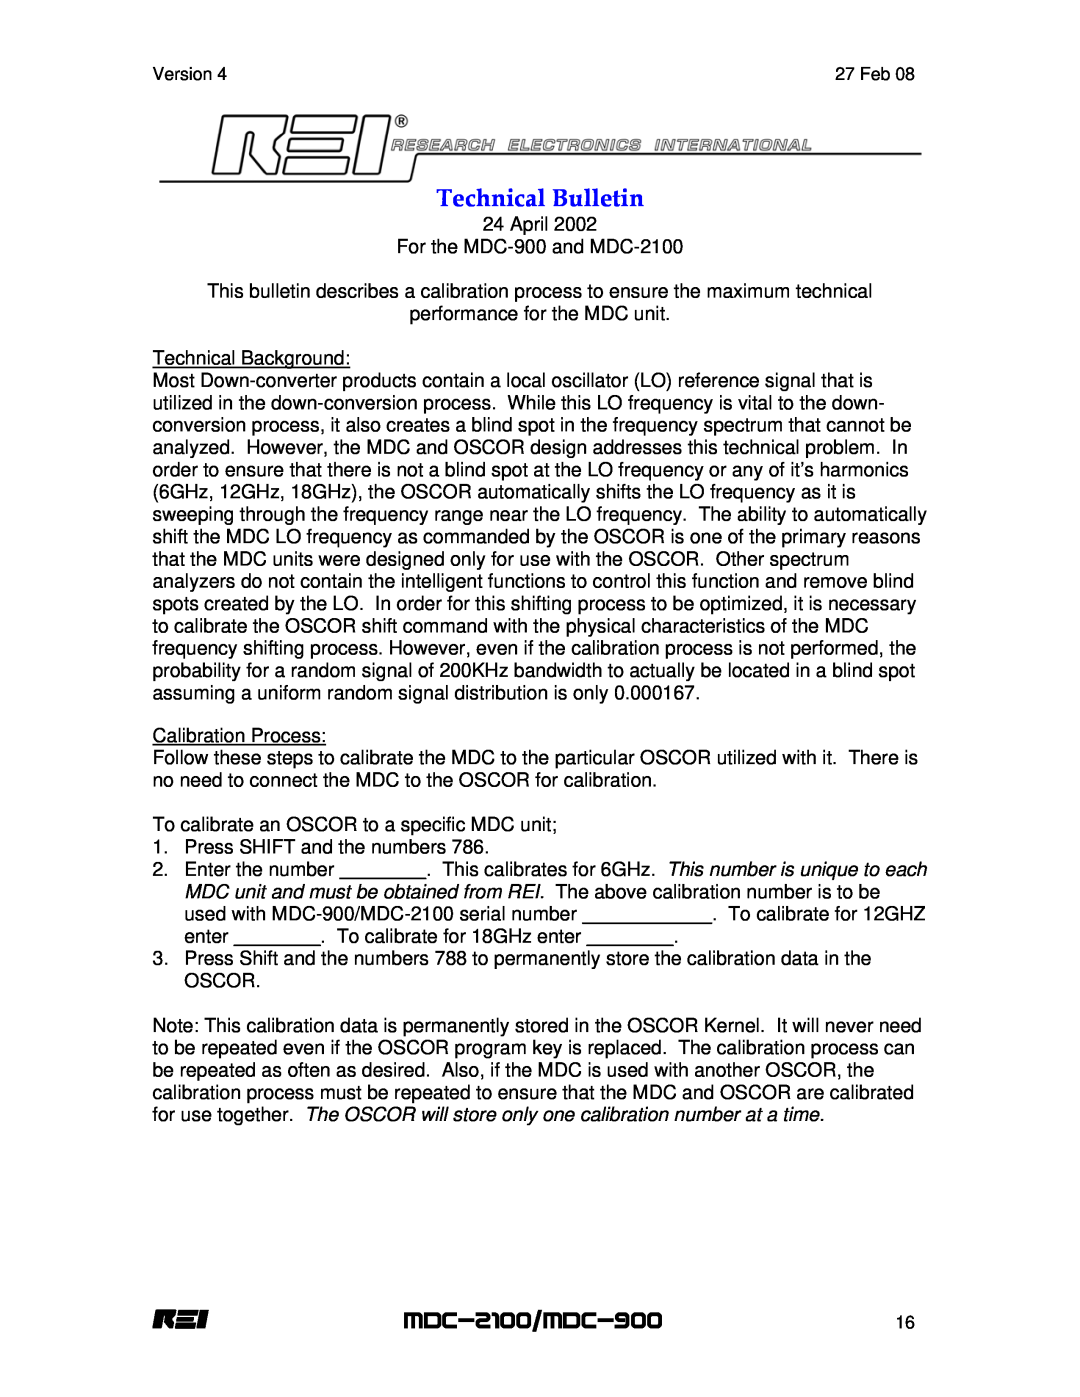 REI manual Technical Bulletin, MDC-2100/MDC-900 